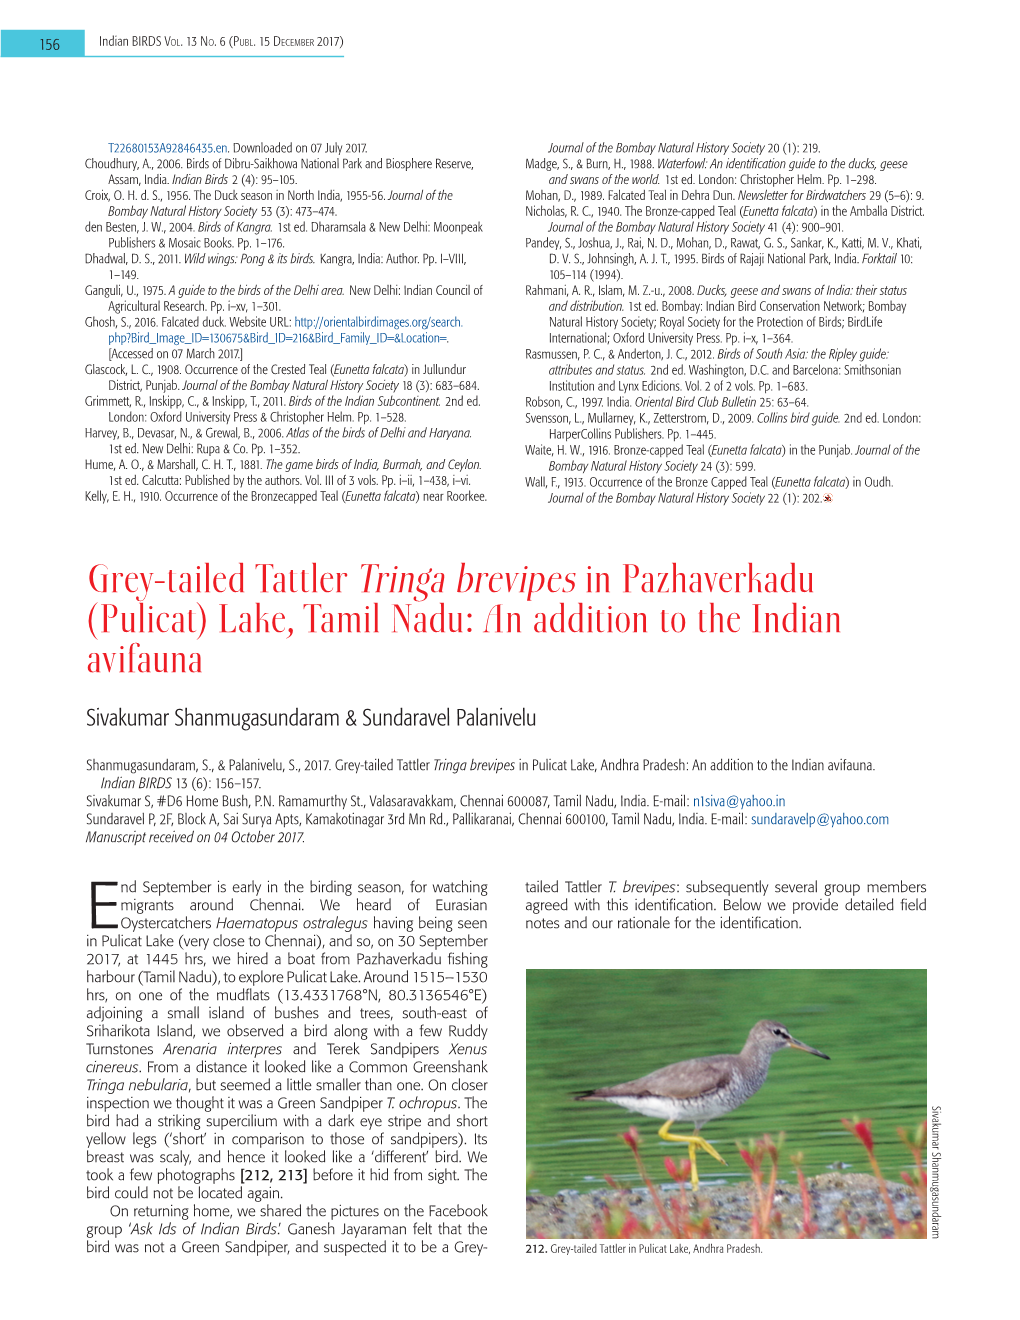 Grey-Tailed Tattler Tringa Brevipes in Pazhaverkadu (Pulicat) Lake, Tamil Nadu: an Addition to the Indian Avifauna